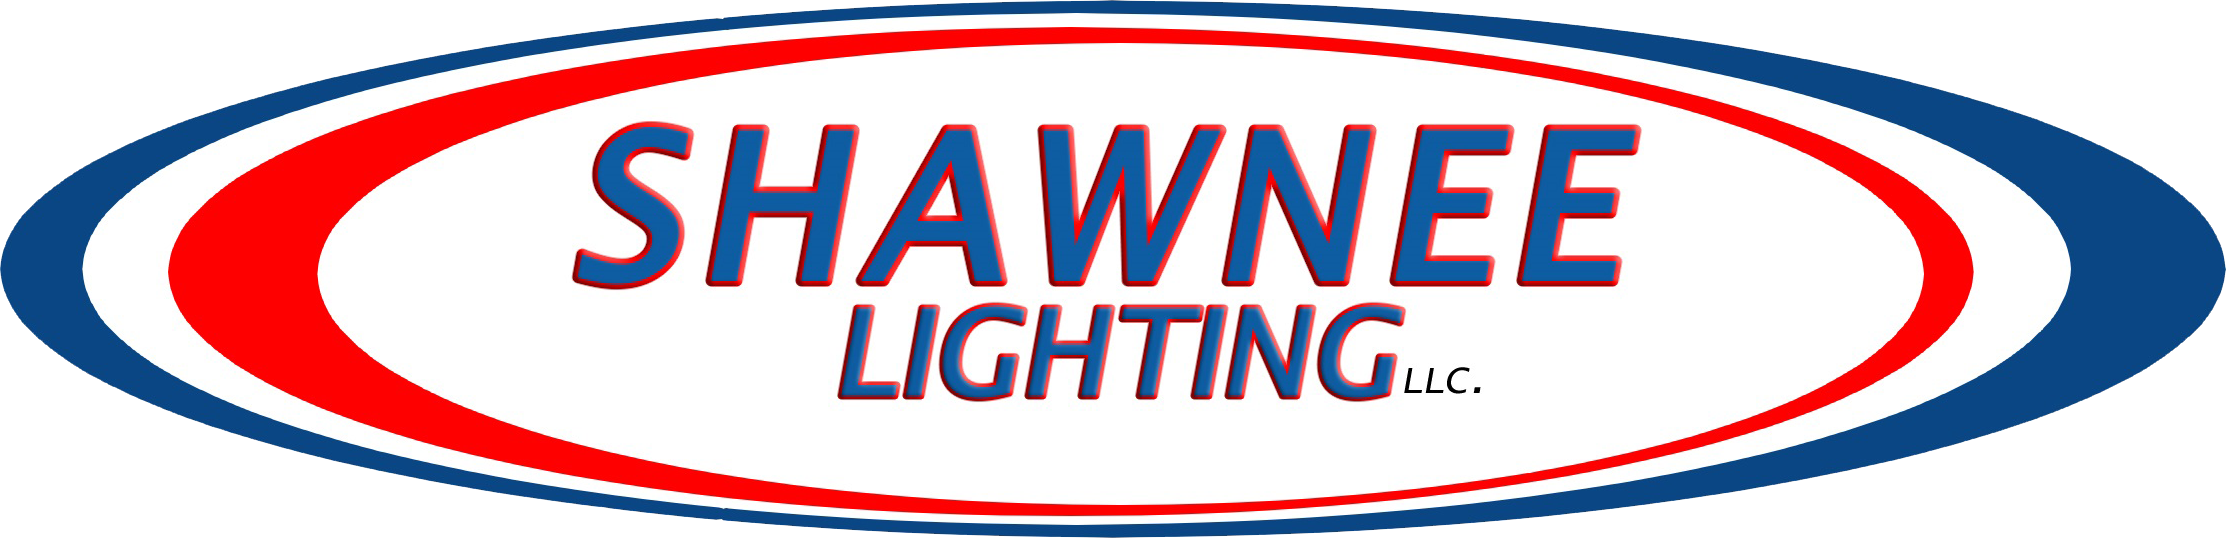 Shawnee Lighting LLC